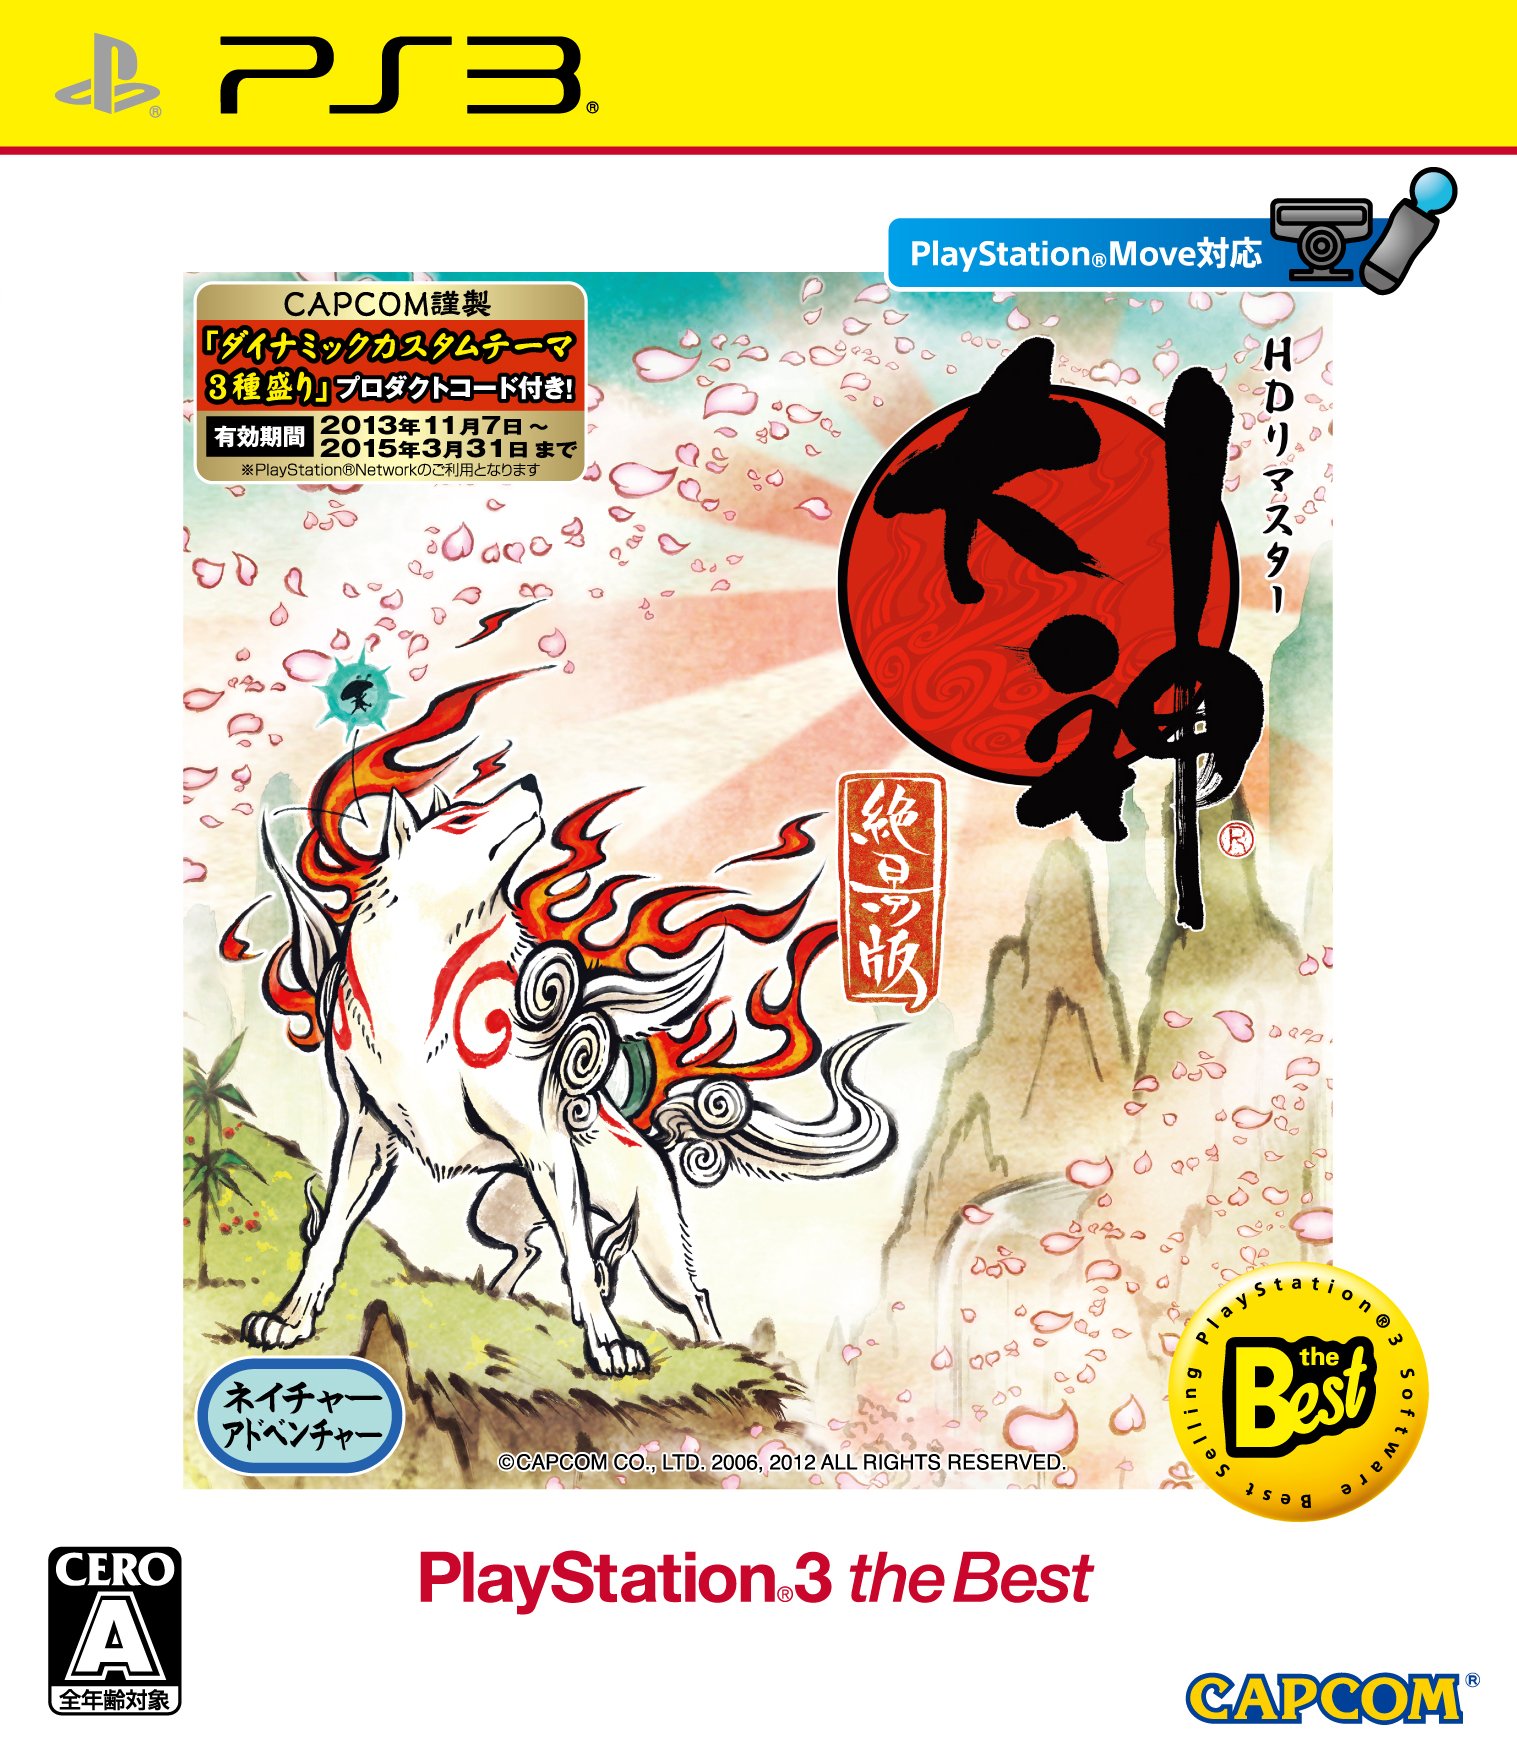 Okami: Zekkeiban HD Remaster (Playstation 3 the Best) [Japan Import]